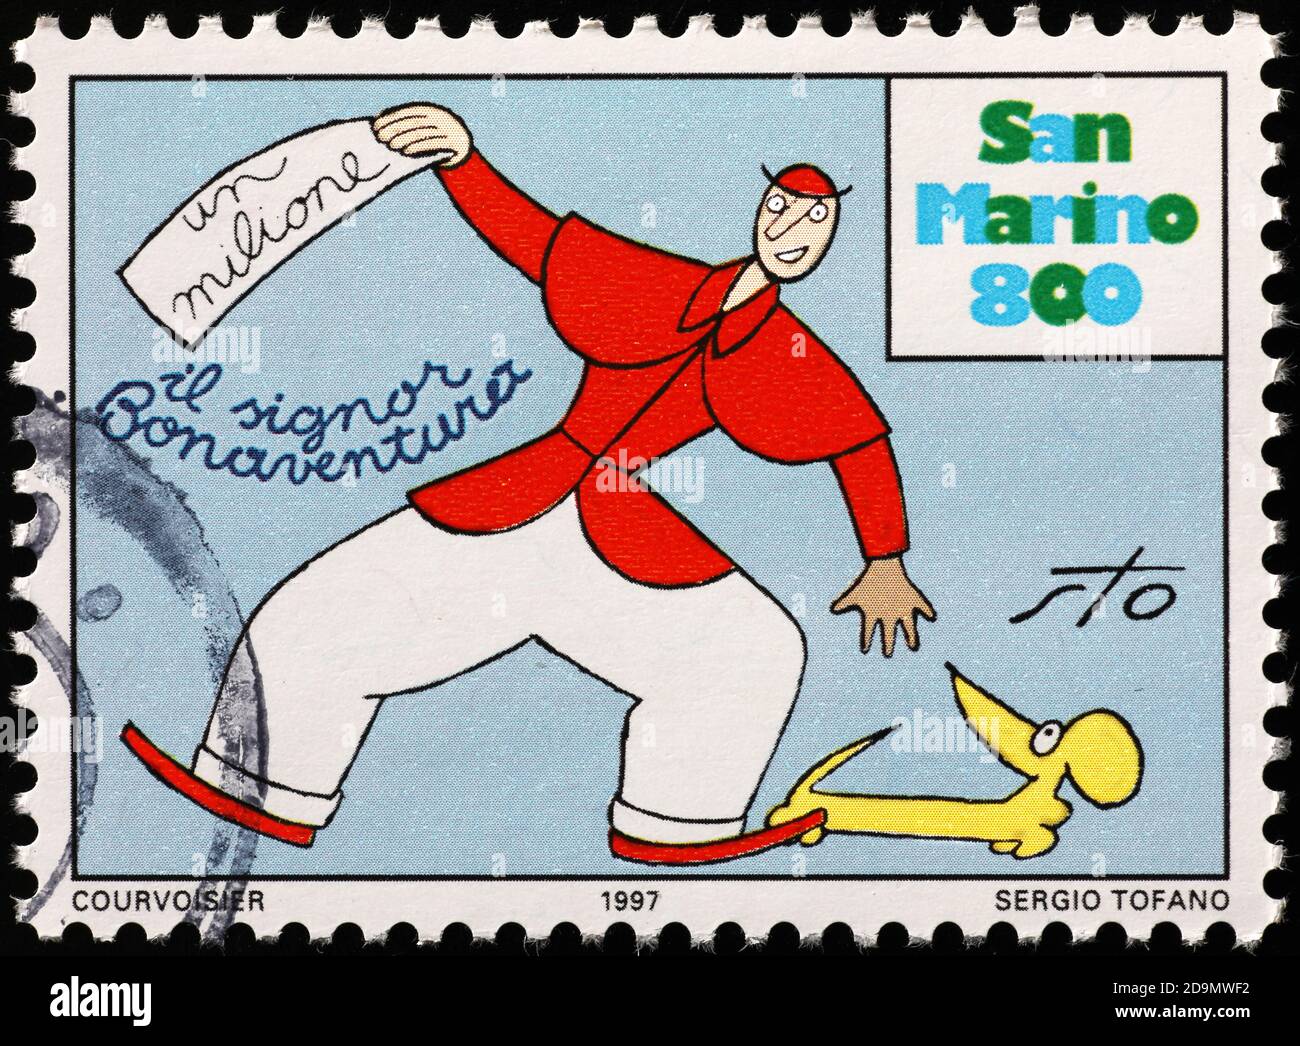 Alte italienische Karikatur Signor Bonaventura auf Briefmarke Stockfoto